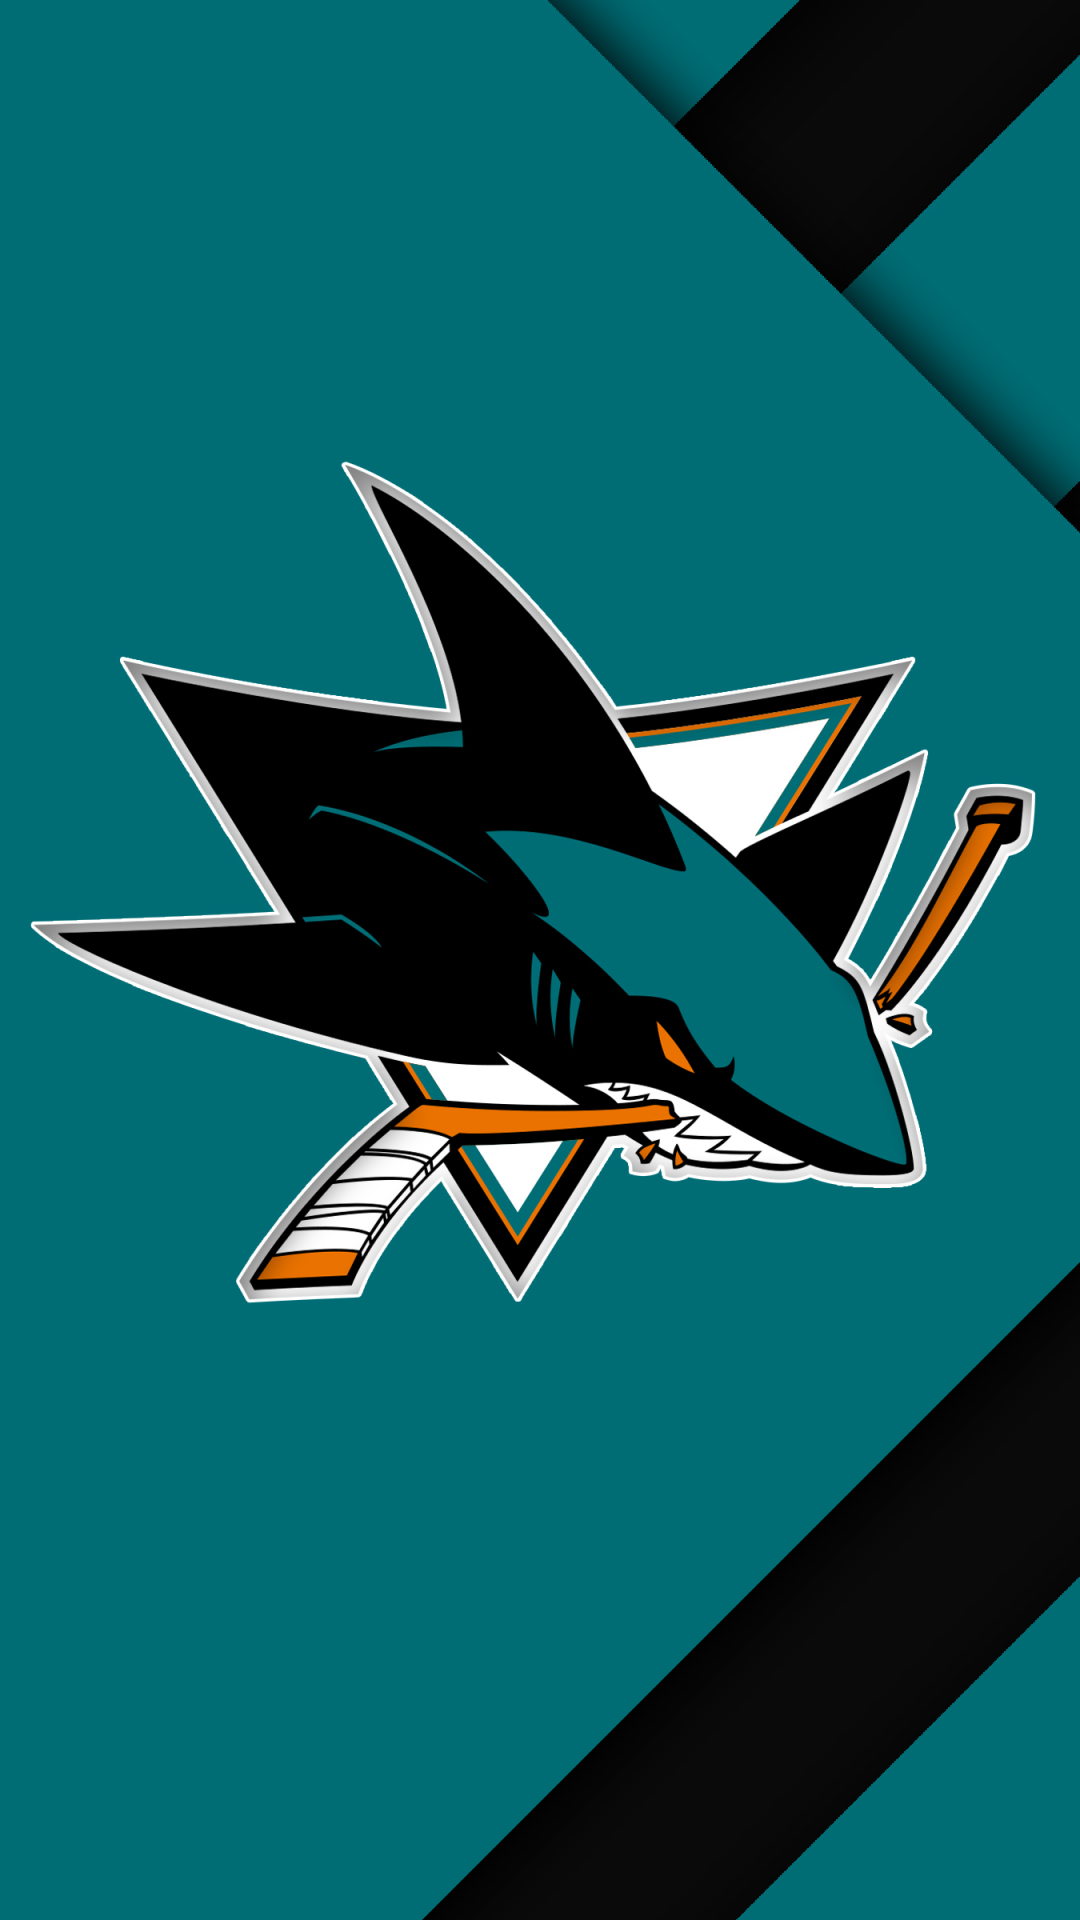 Mobile wallpaper Sports, Hockey, Logo, Emblem, Nhl, San Jose Sharks, 1157239 download the picture for free.